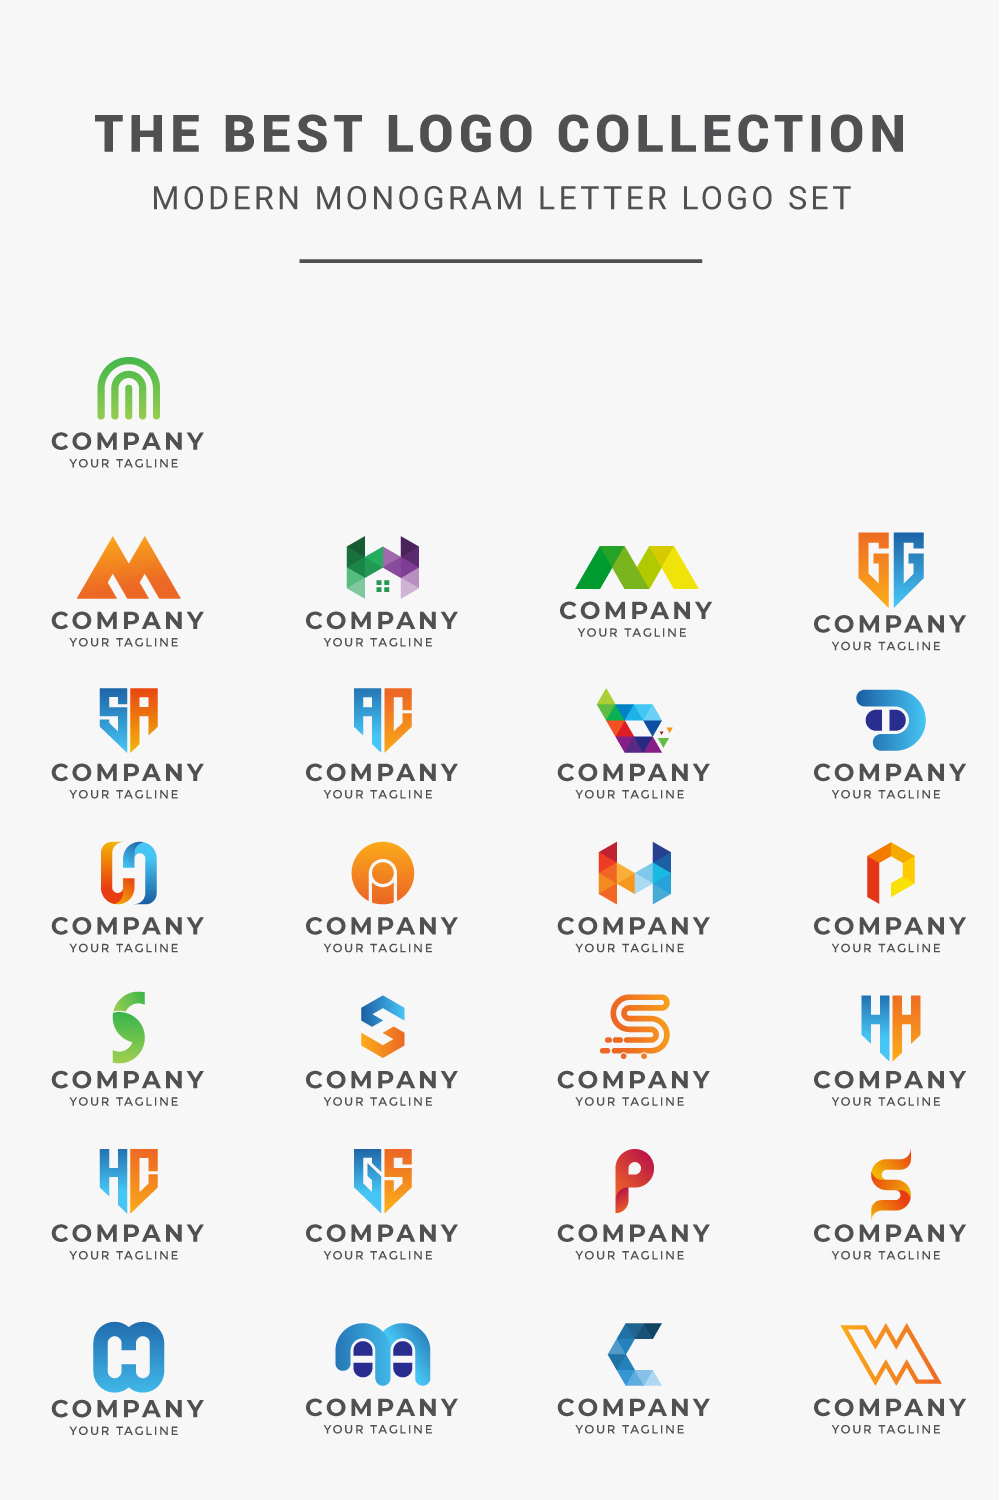 25 Logos Bundle Modern Monogram Letter Logo Set for a different types of businesses pinterest preview image.